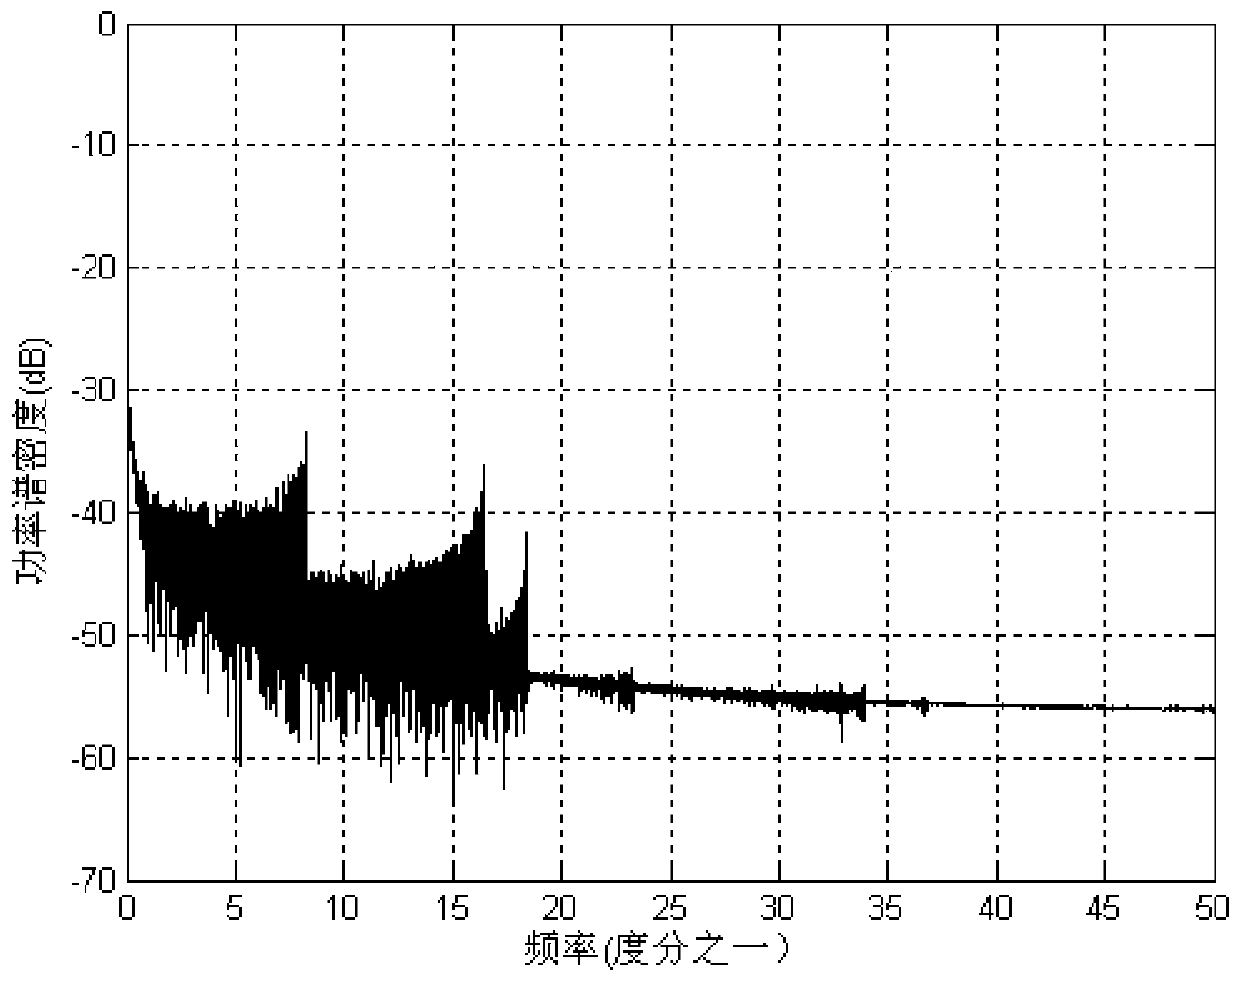 RCS fluctuation period analysis method based on power spectrum estimation